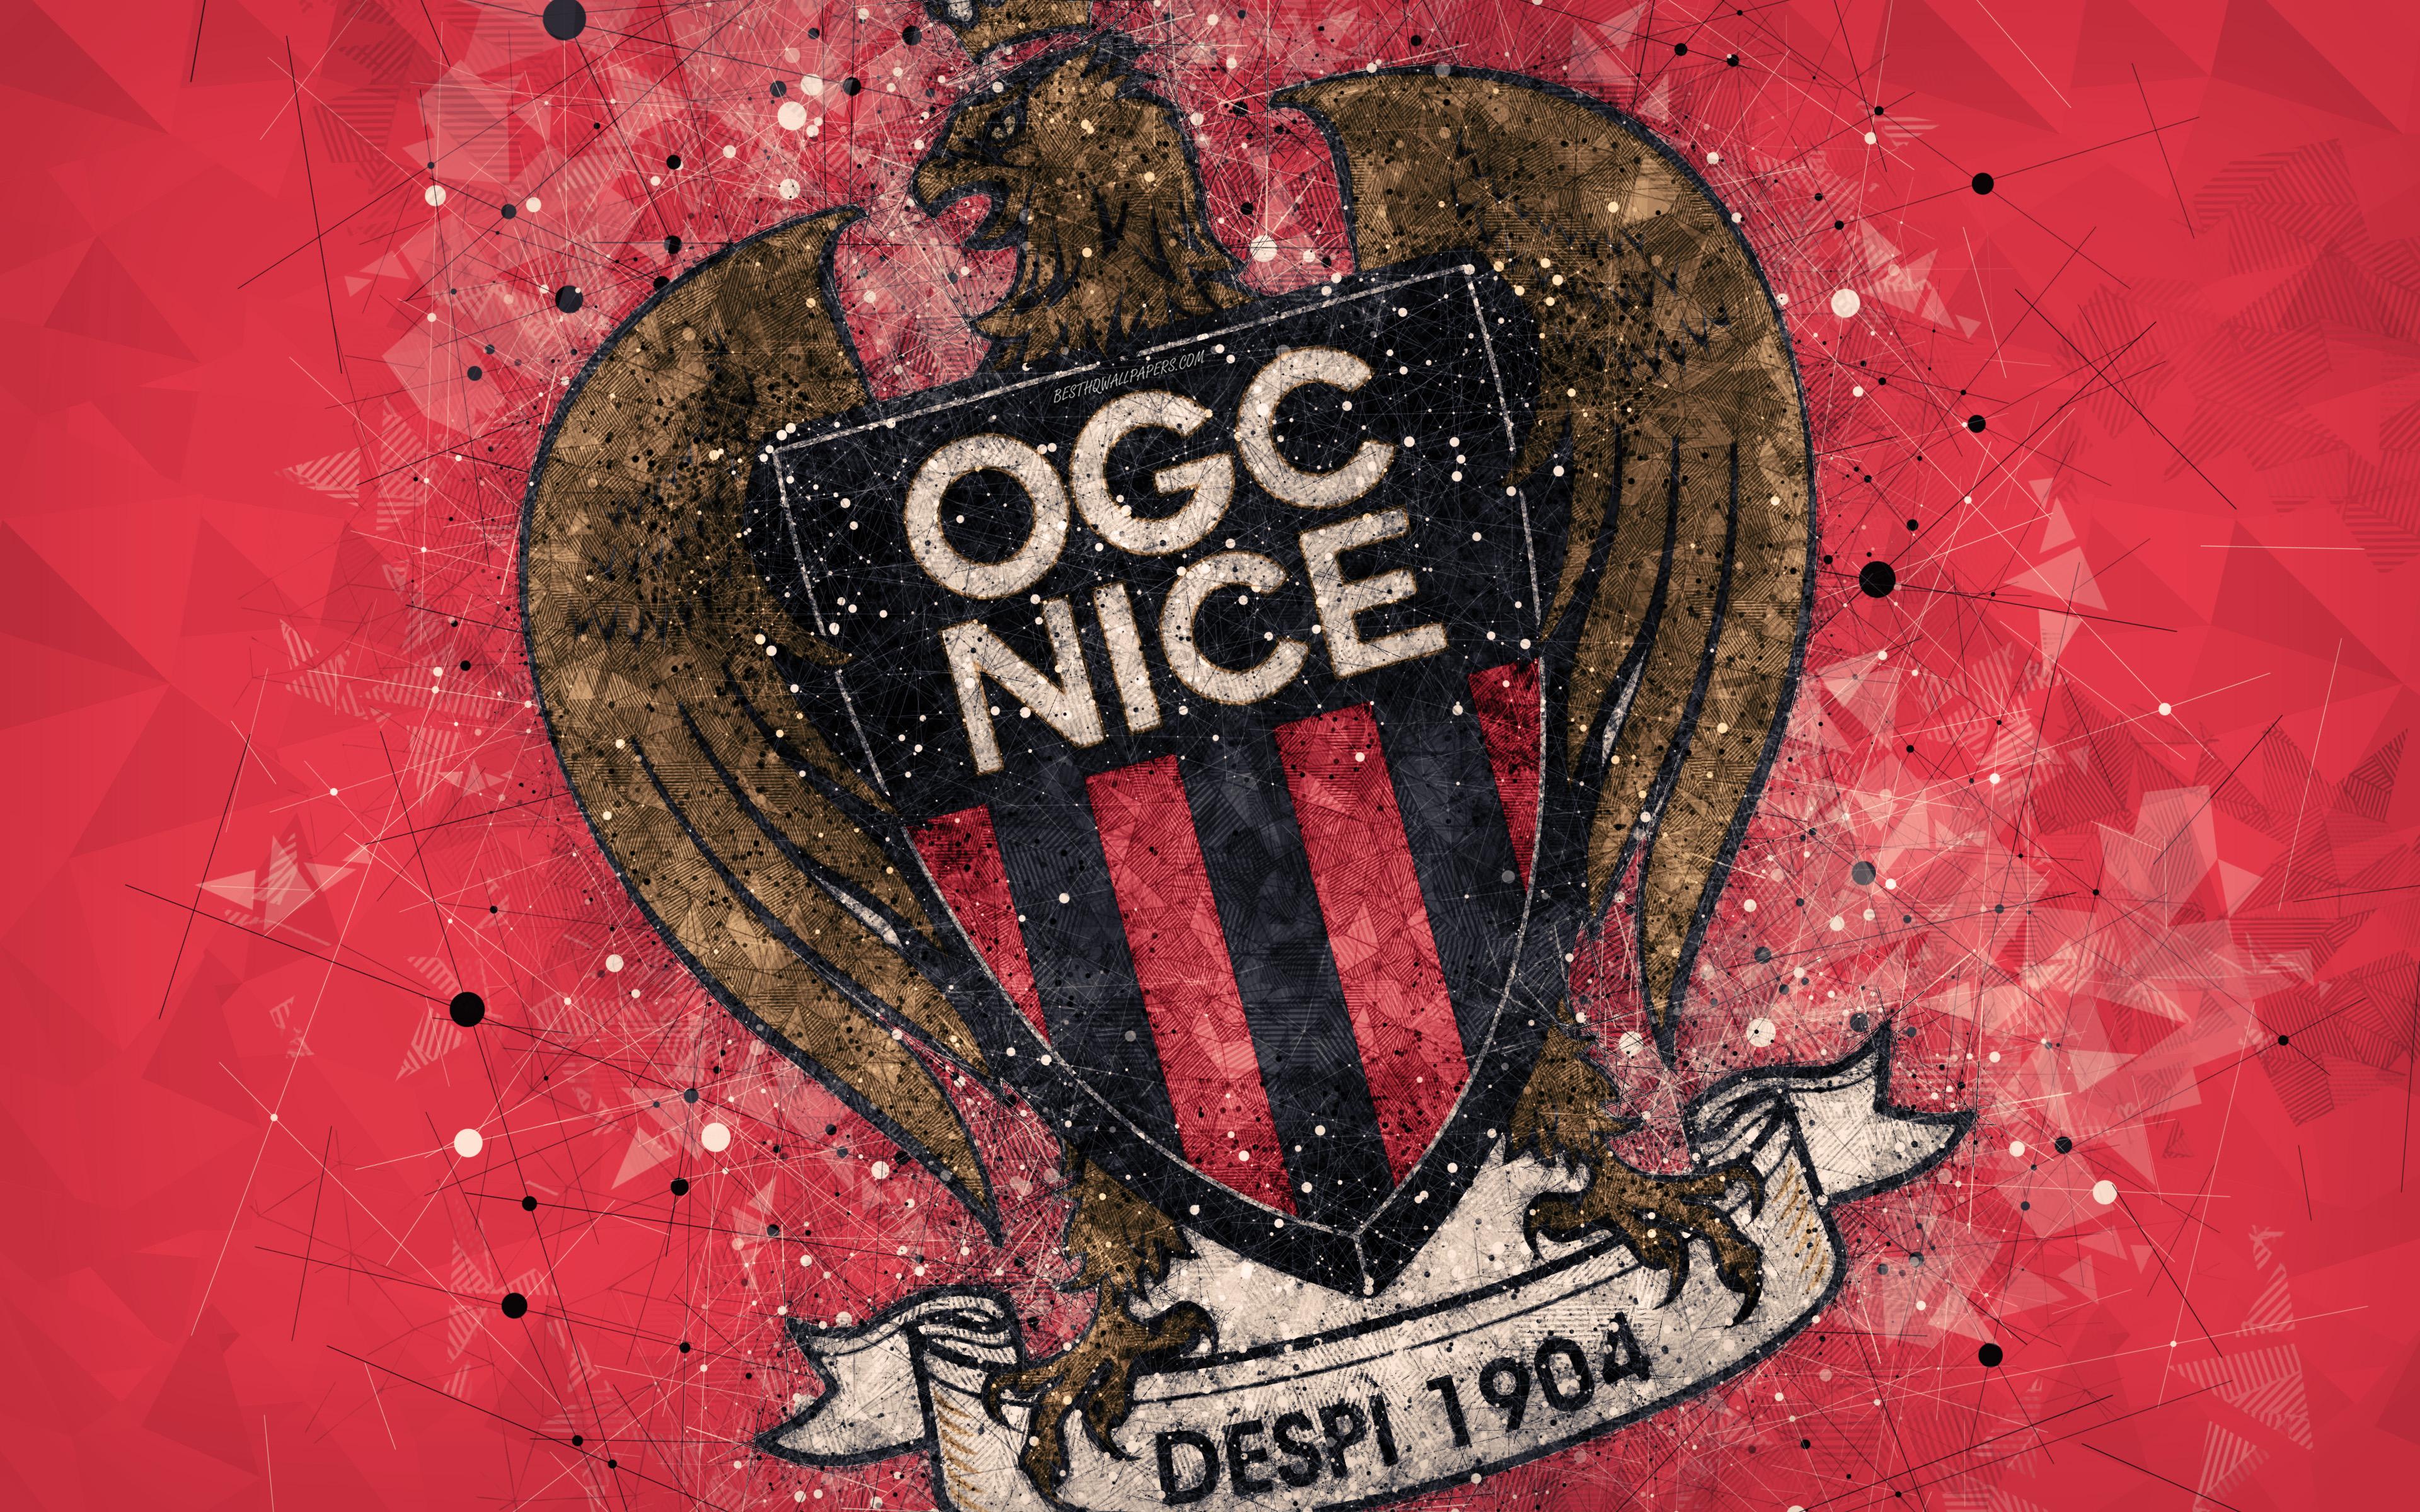 Download wallpaper OGC Nice, 4k, geometric art, French football